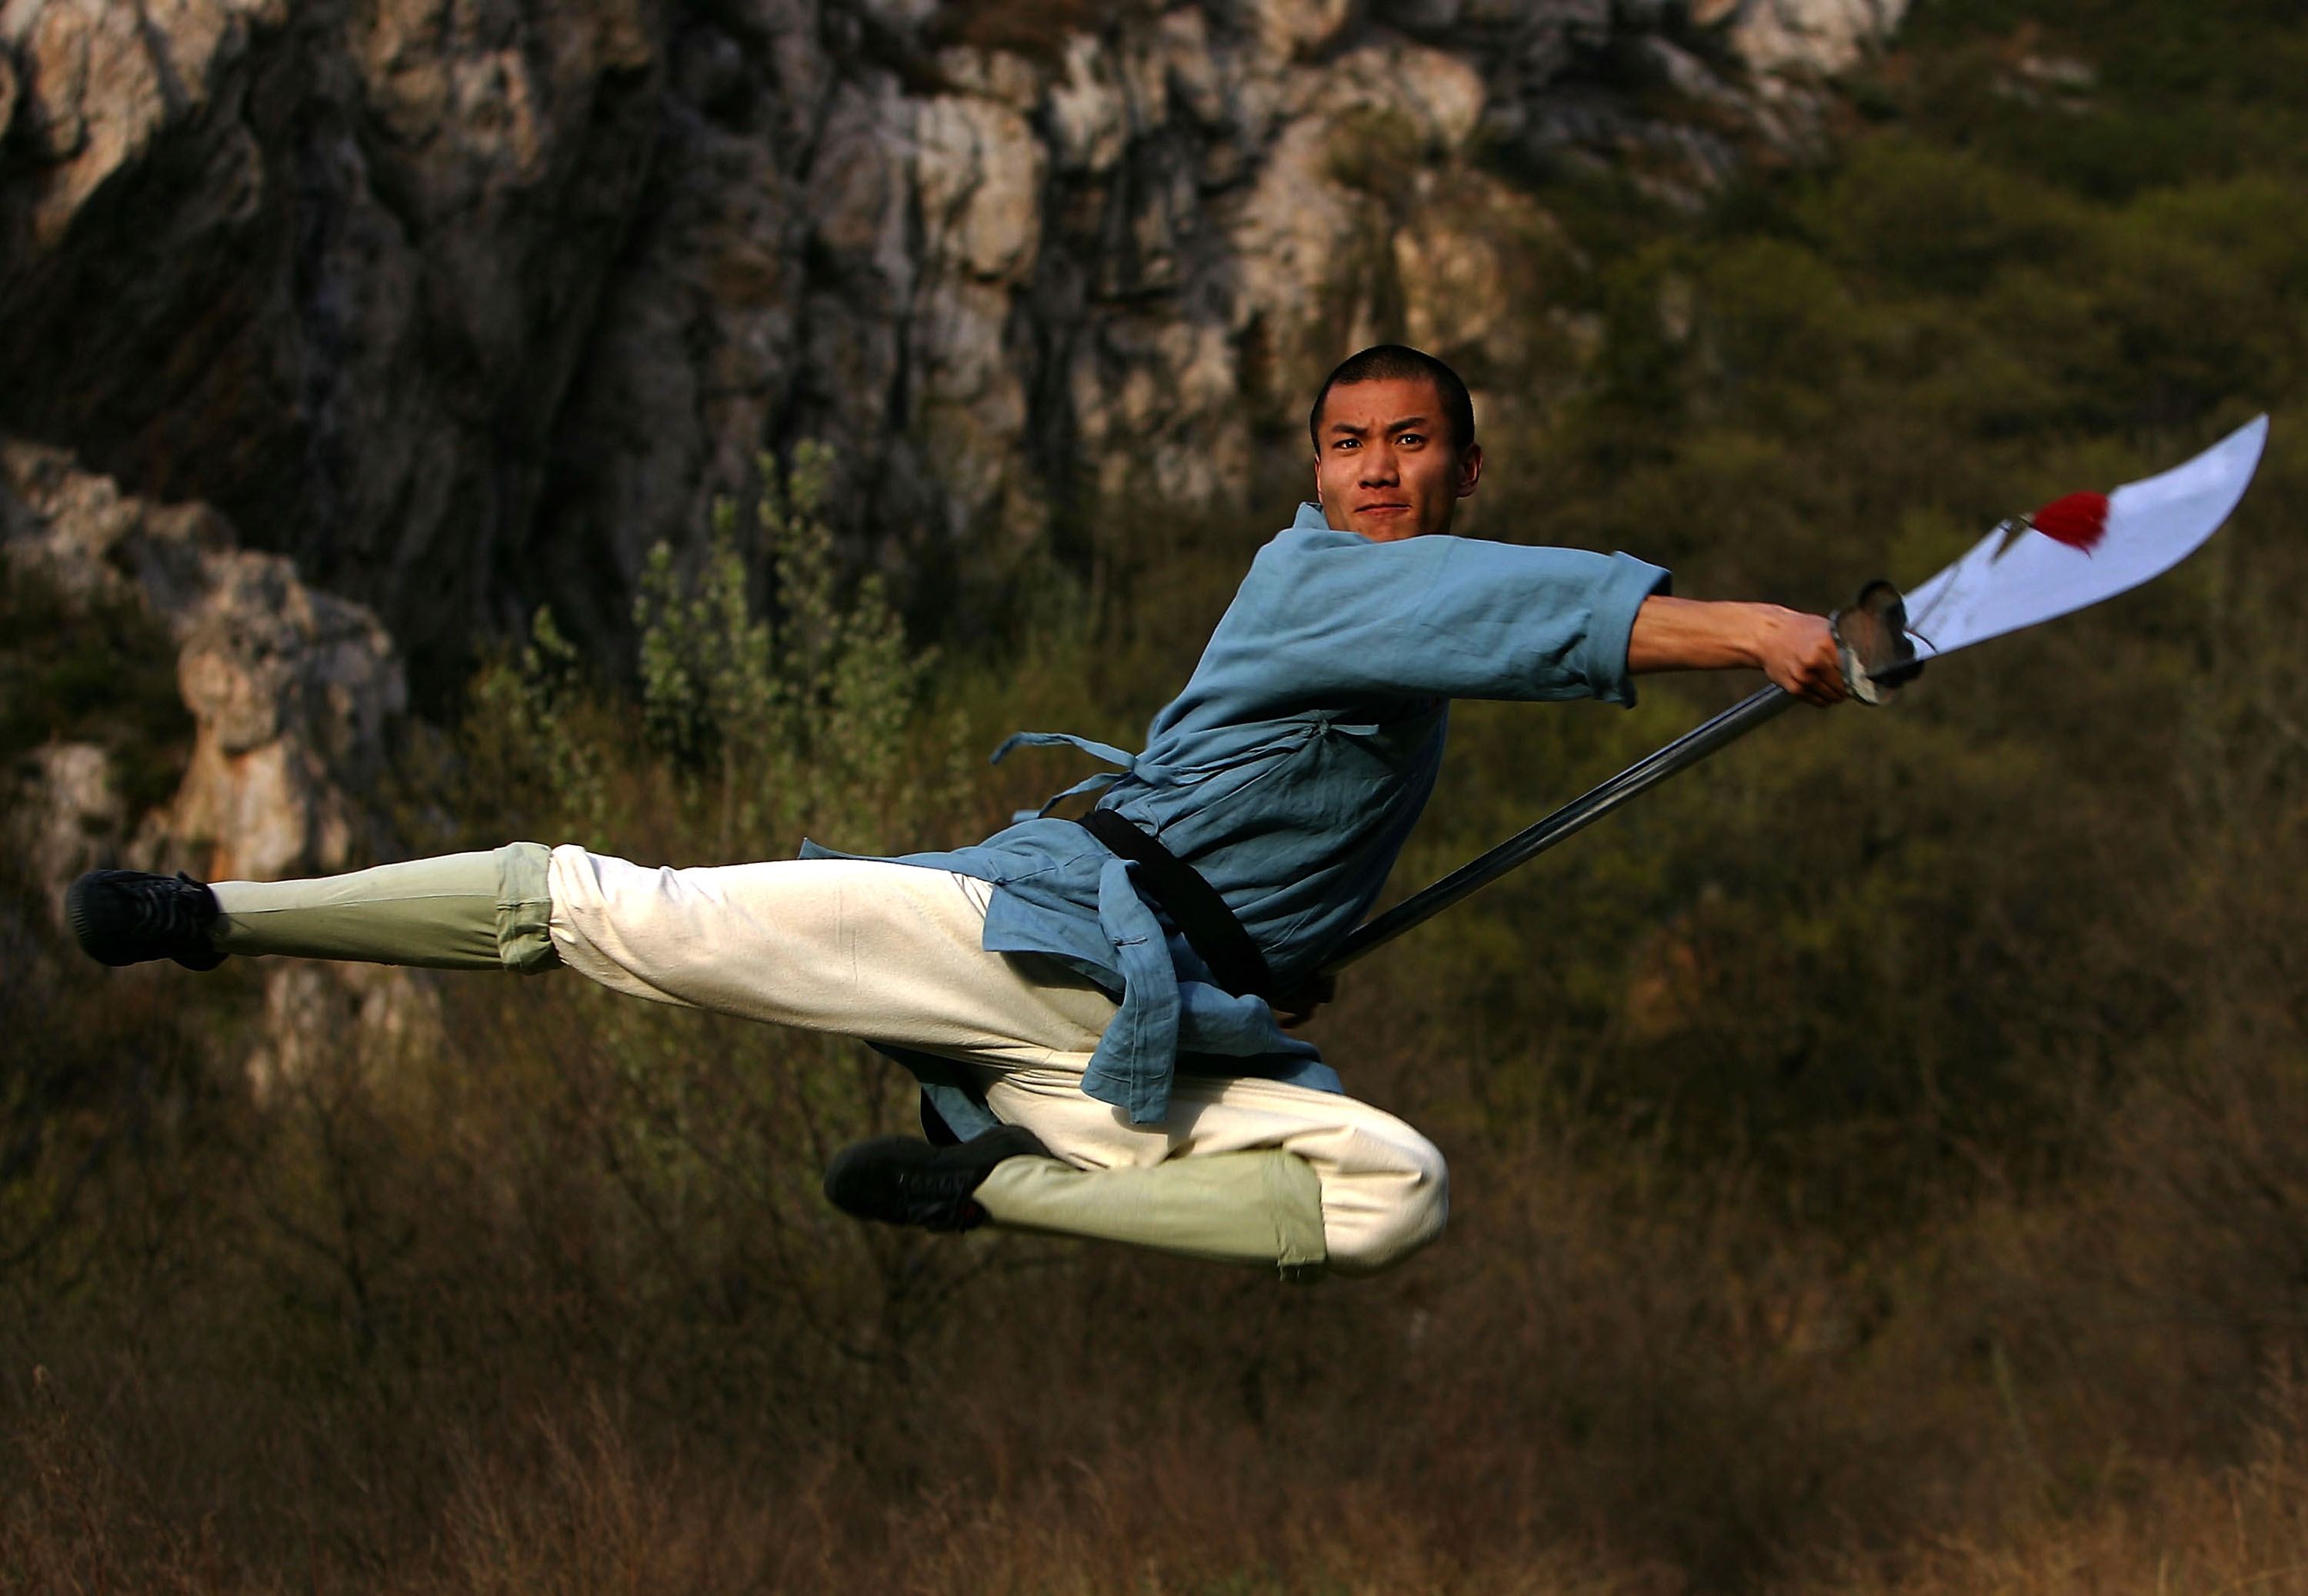 shaolin kung fu wallpaper,extreme sport,recreation,adventure,sports,jumping